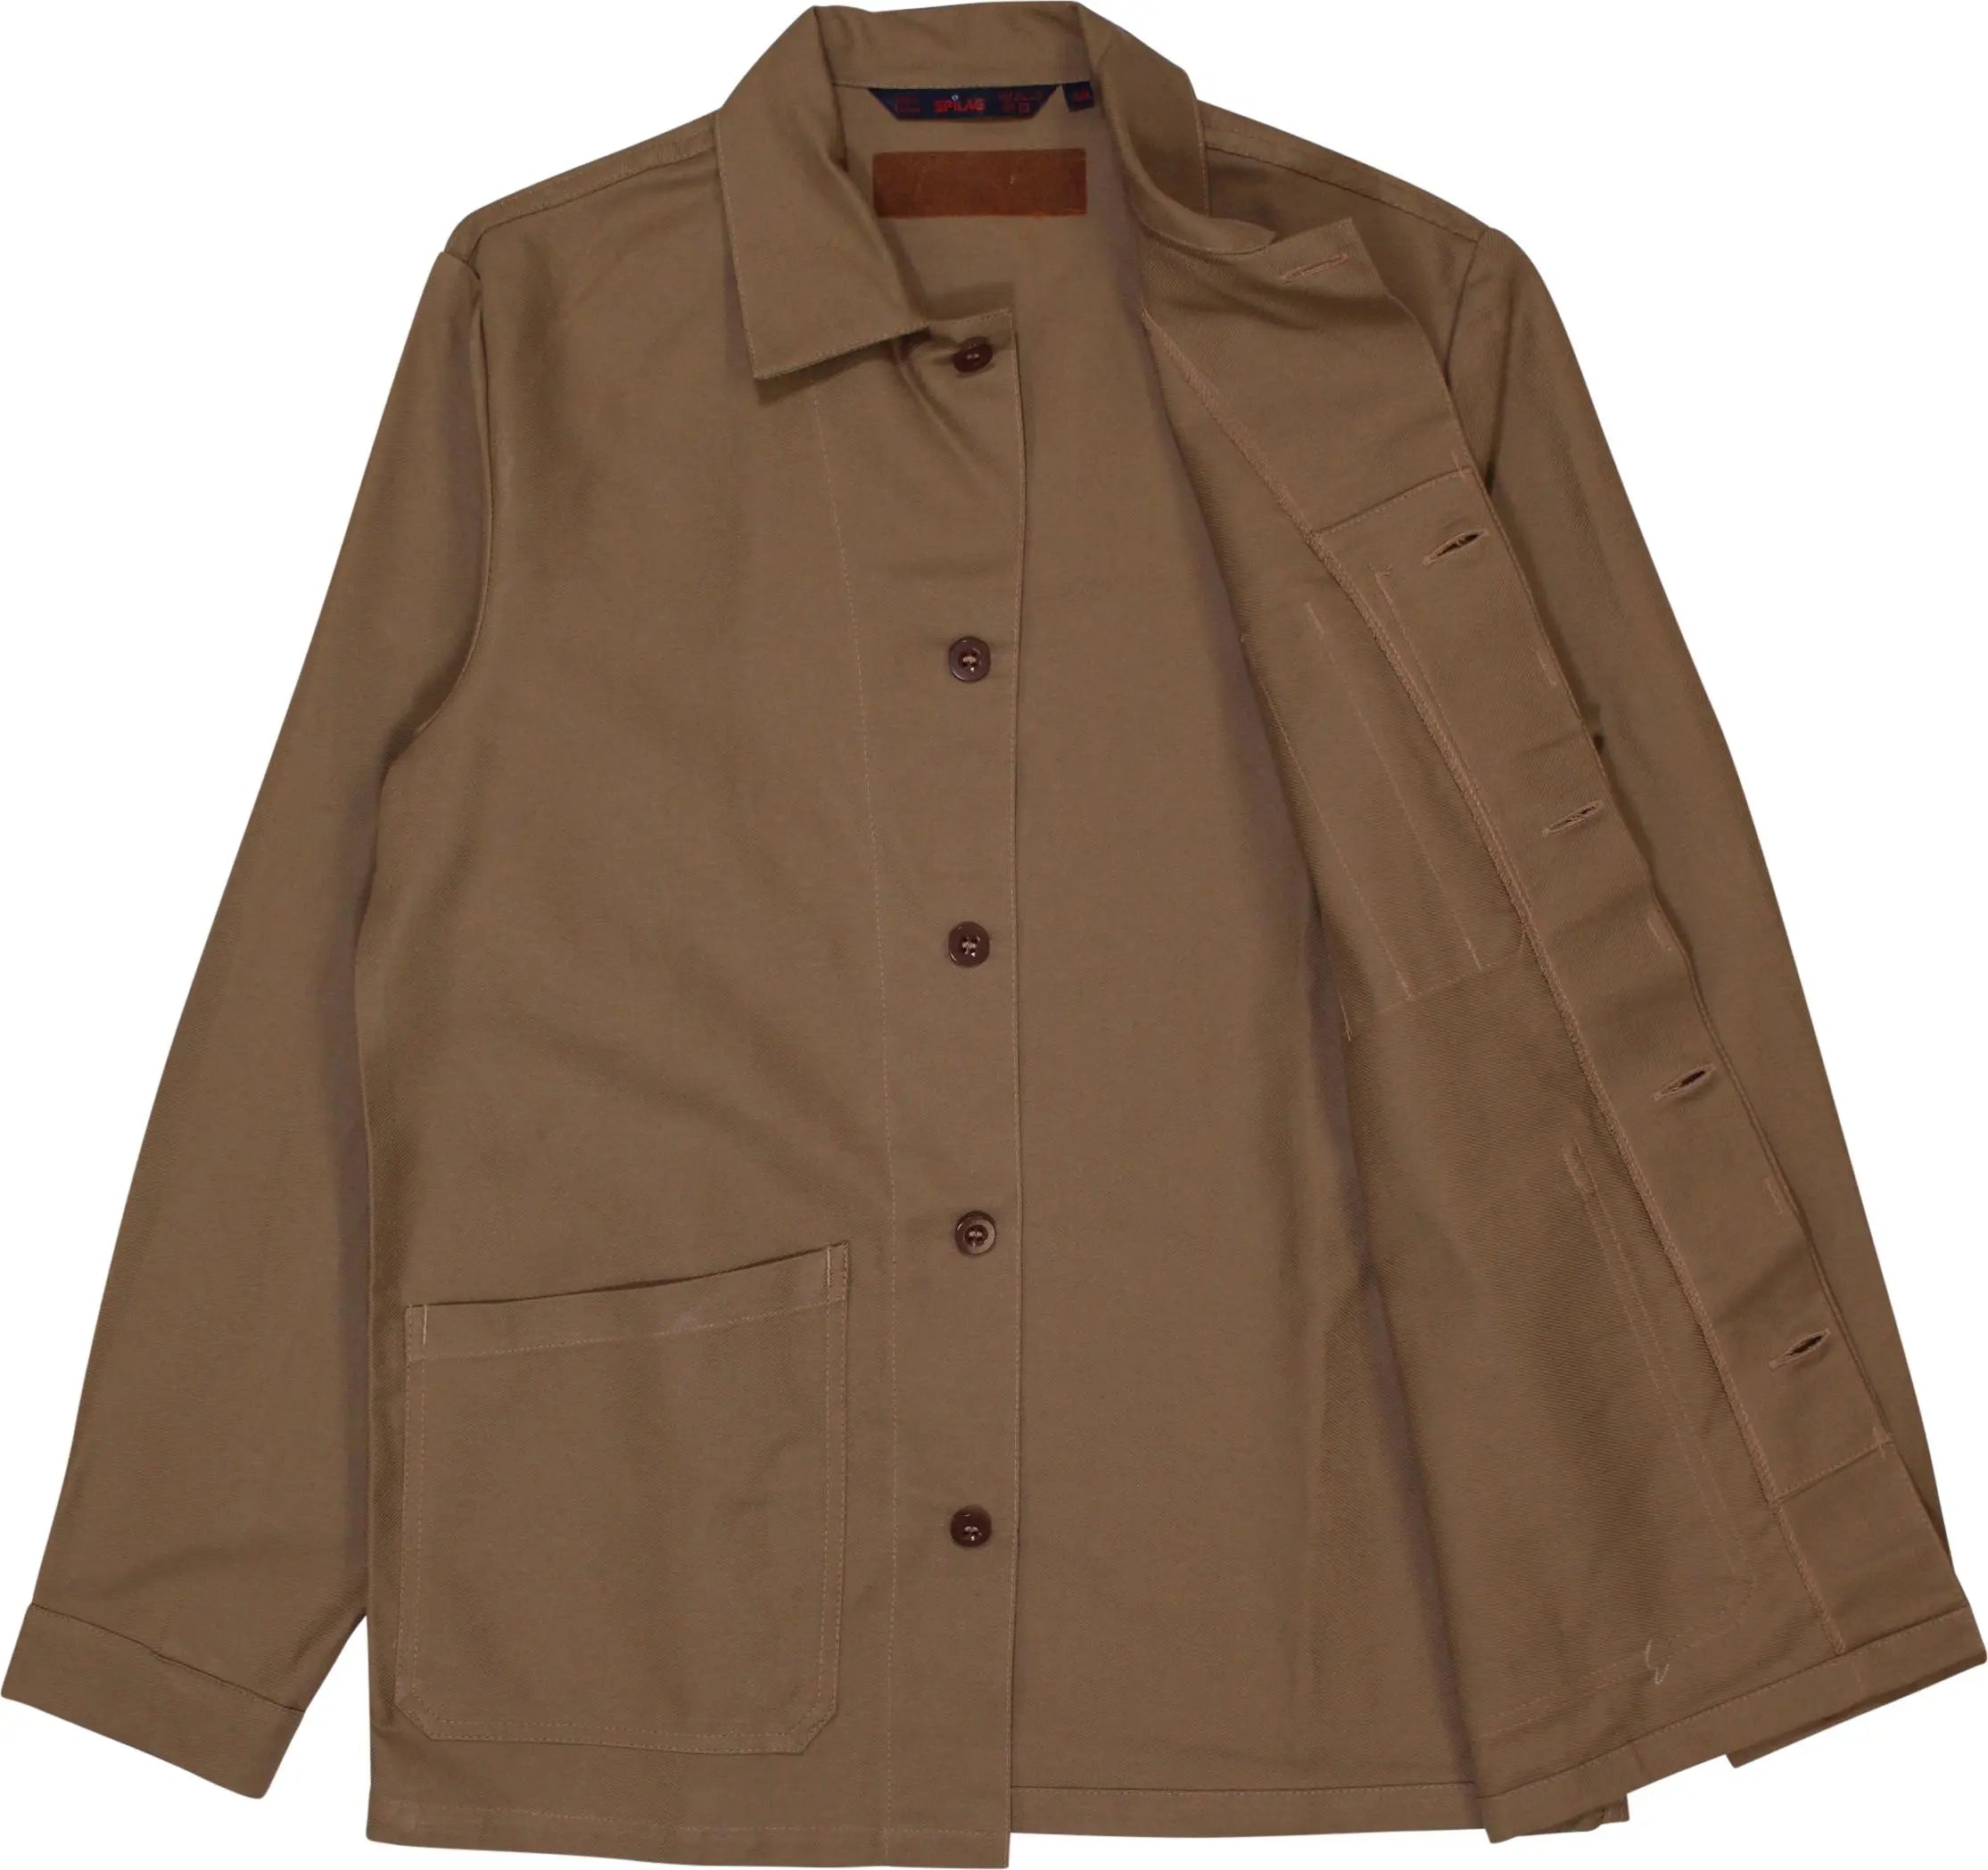 Spilag - 70s Workwear Jacket- ThriftTale.com - Vintage and second handclothing